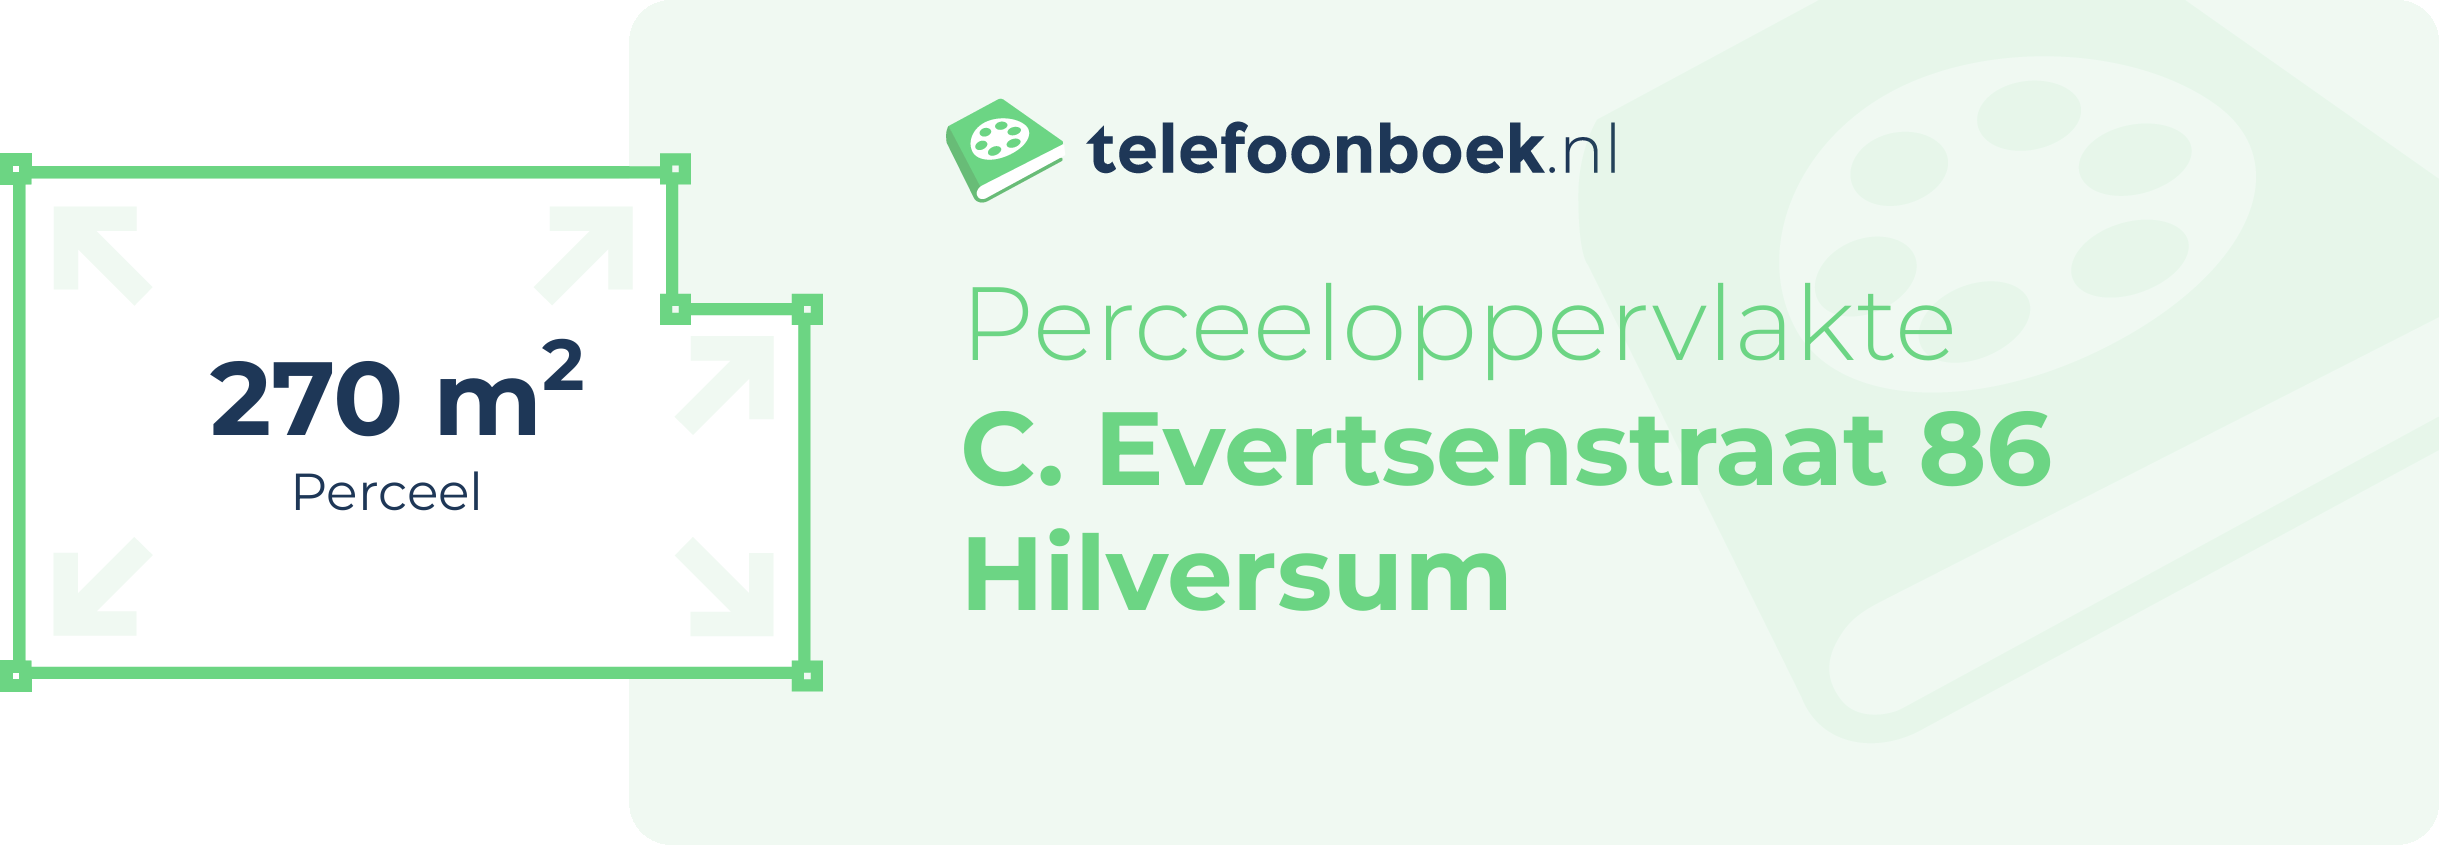 Perceeloppervlakte C. Evertsenstraat 86 Hilversum